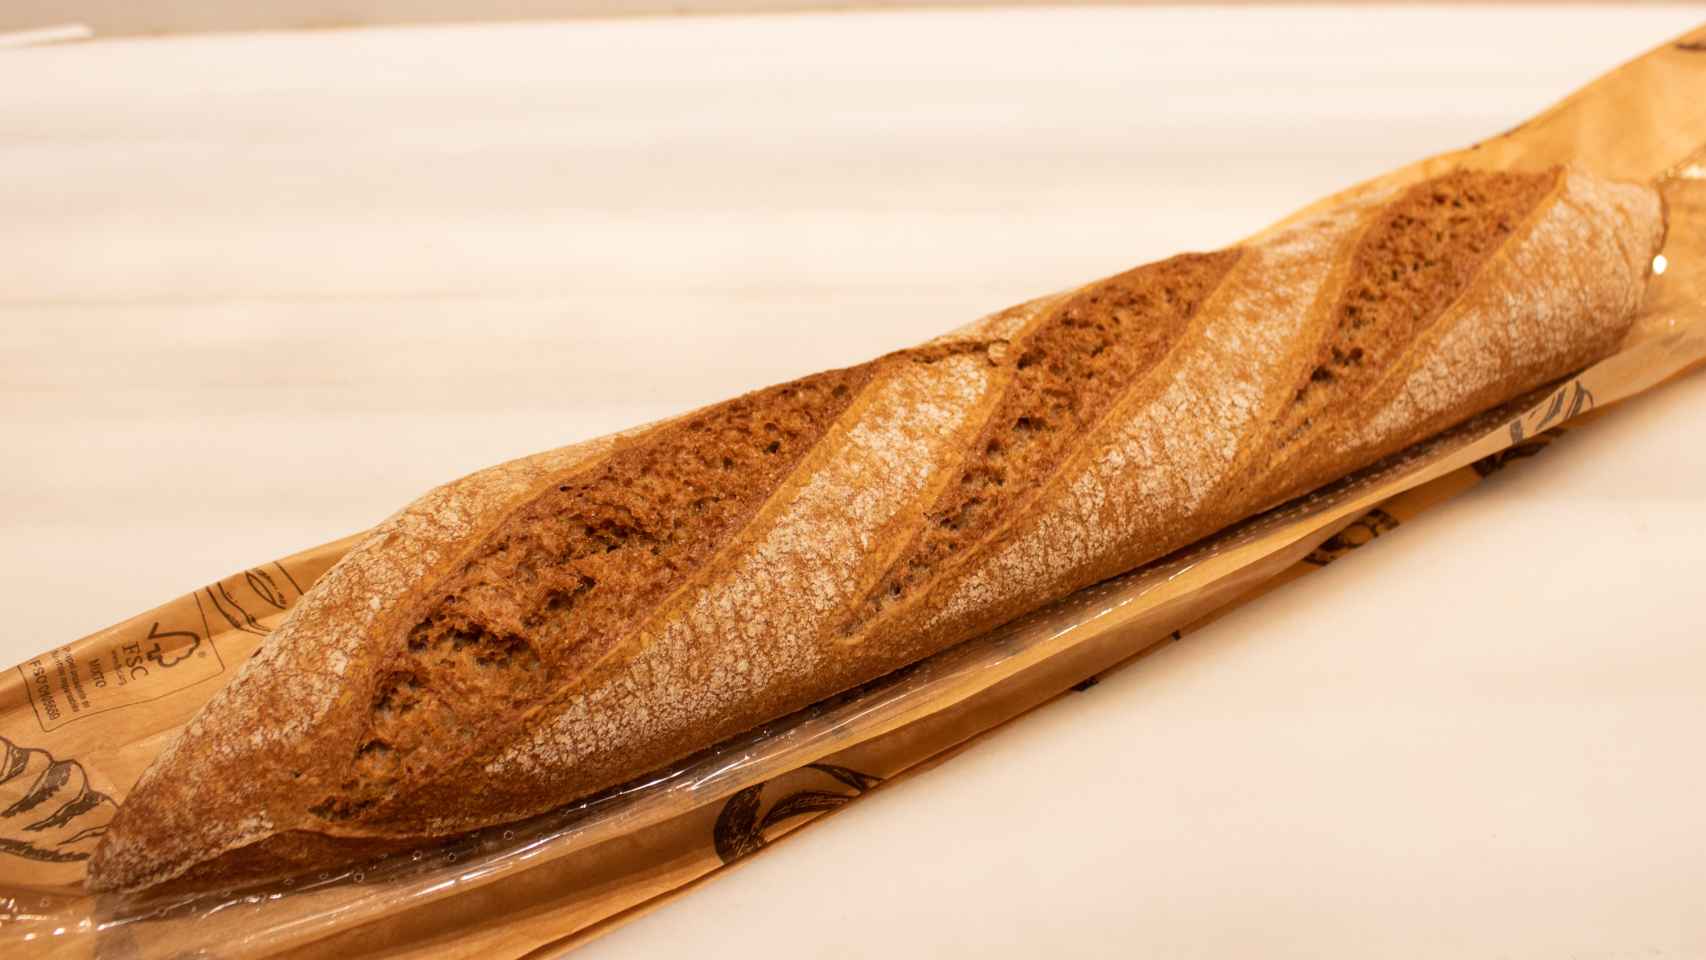 La barra de pan integral 70% de Lidl que cuesta 0,65 euros.